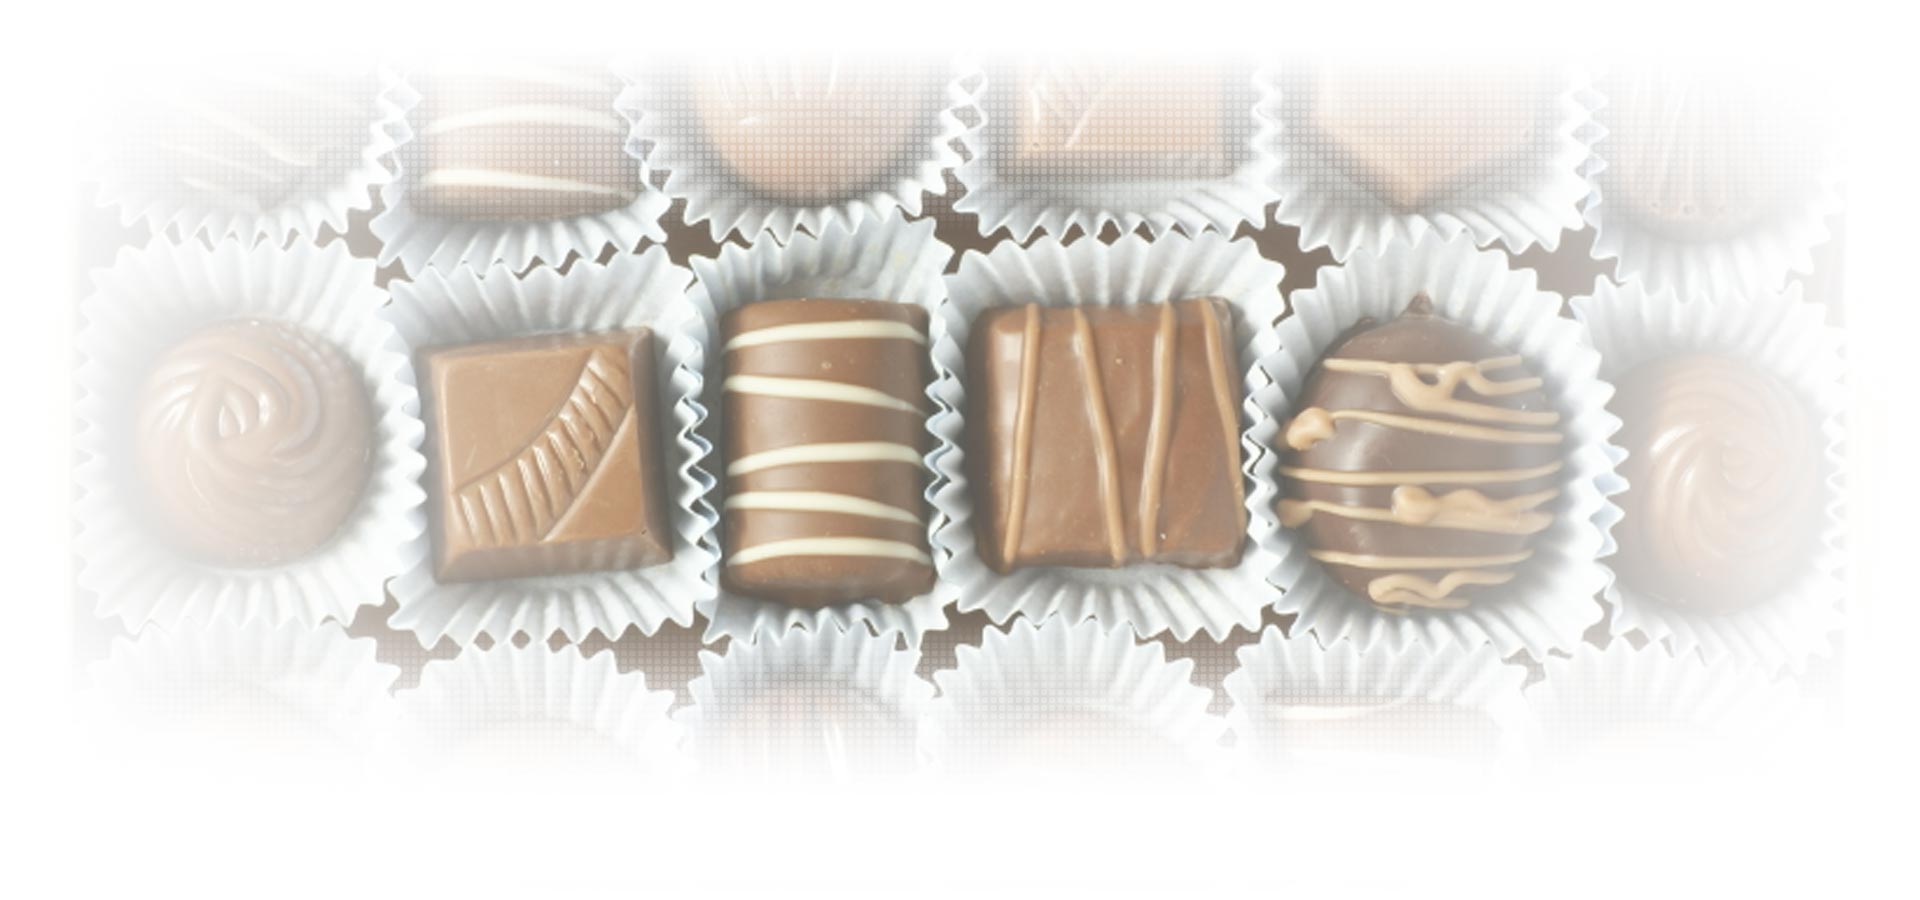 Hand Made Chocolates